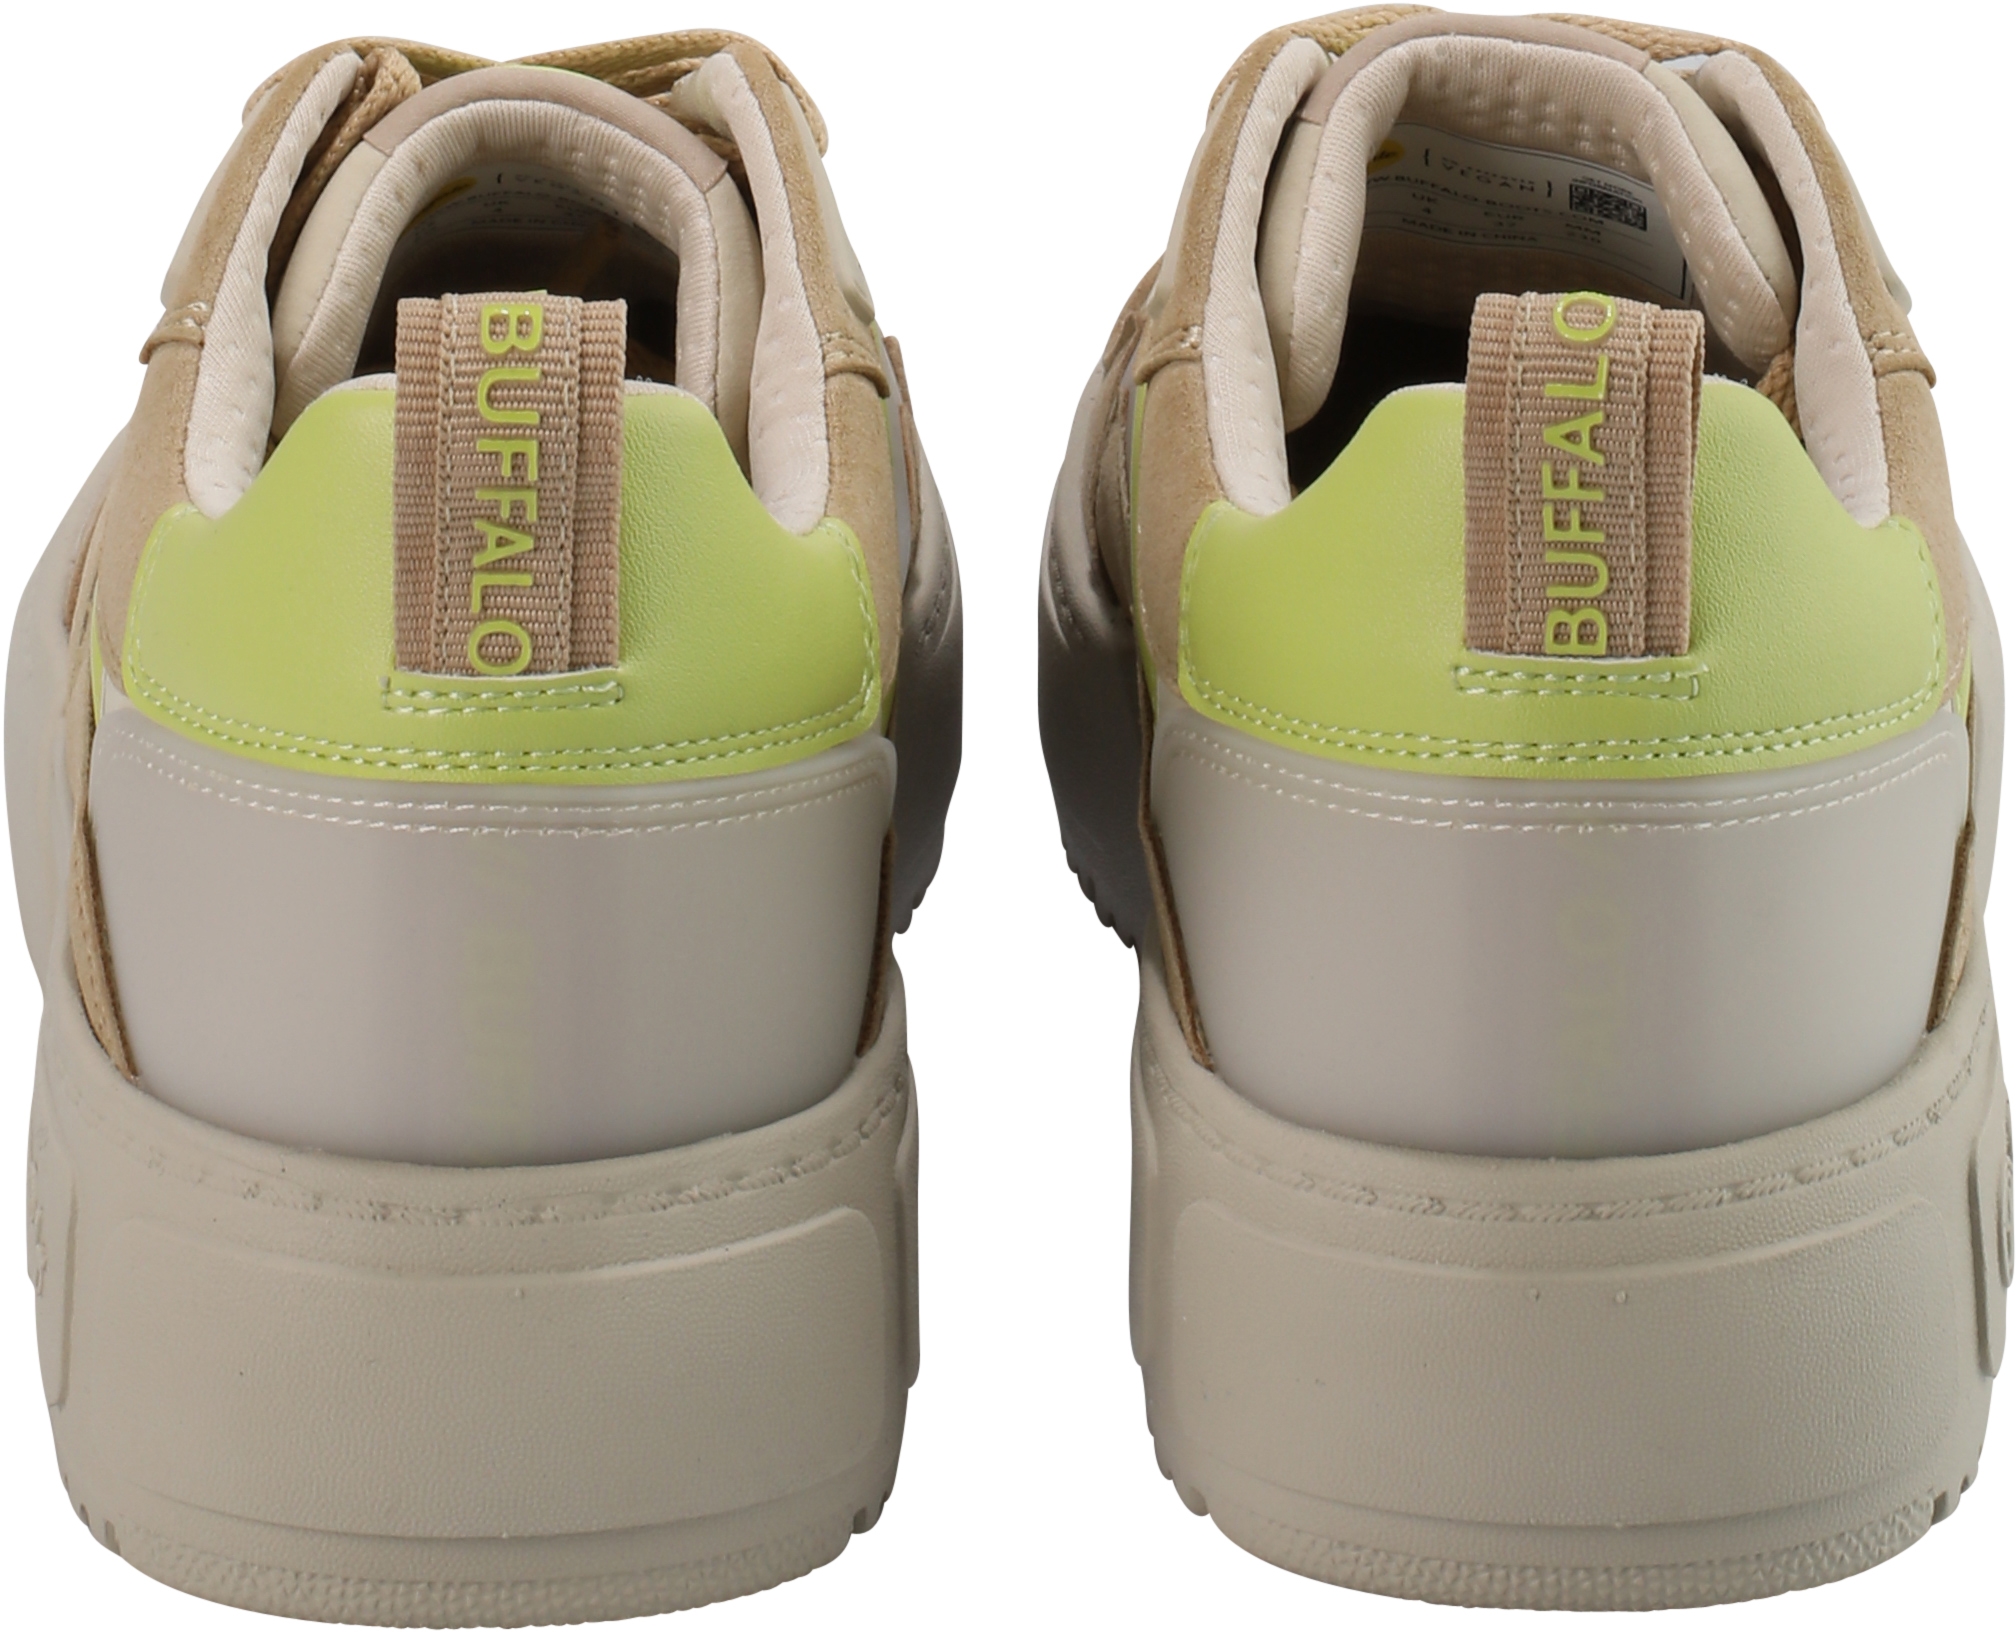 Buffalo Rse V2 - Sneaker Low - Vegan Nubuck - Beige / Lime Imitation leather